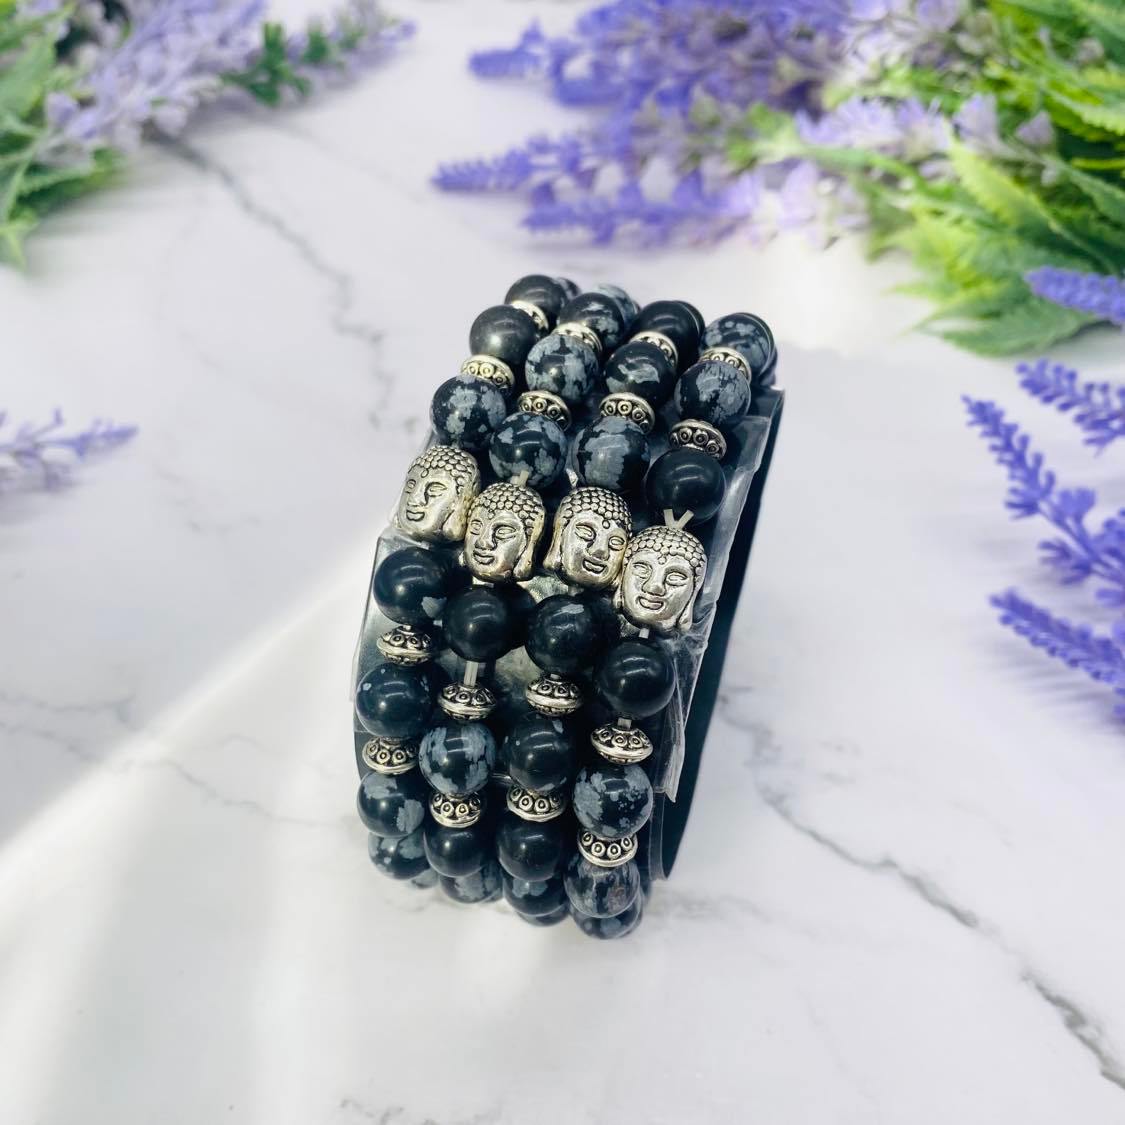 Crystal Bracelets with Buddha Charms, Jasper Bracelets, Aventurine Bracelets, Amazonite Bracelets, 8 mm Beads, Healing Bracelets